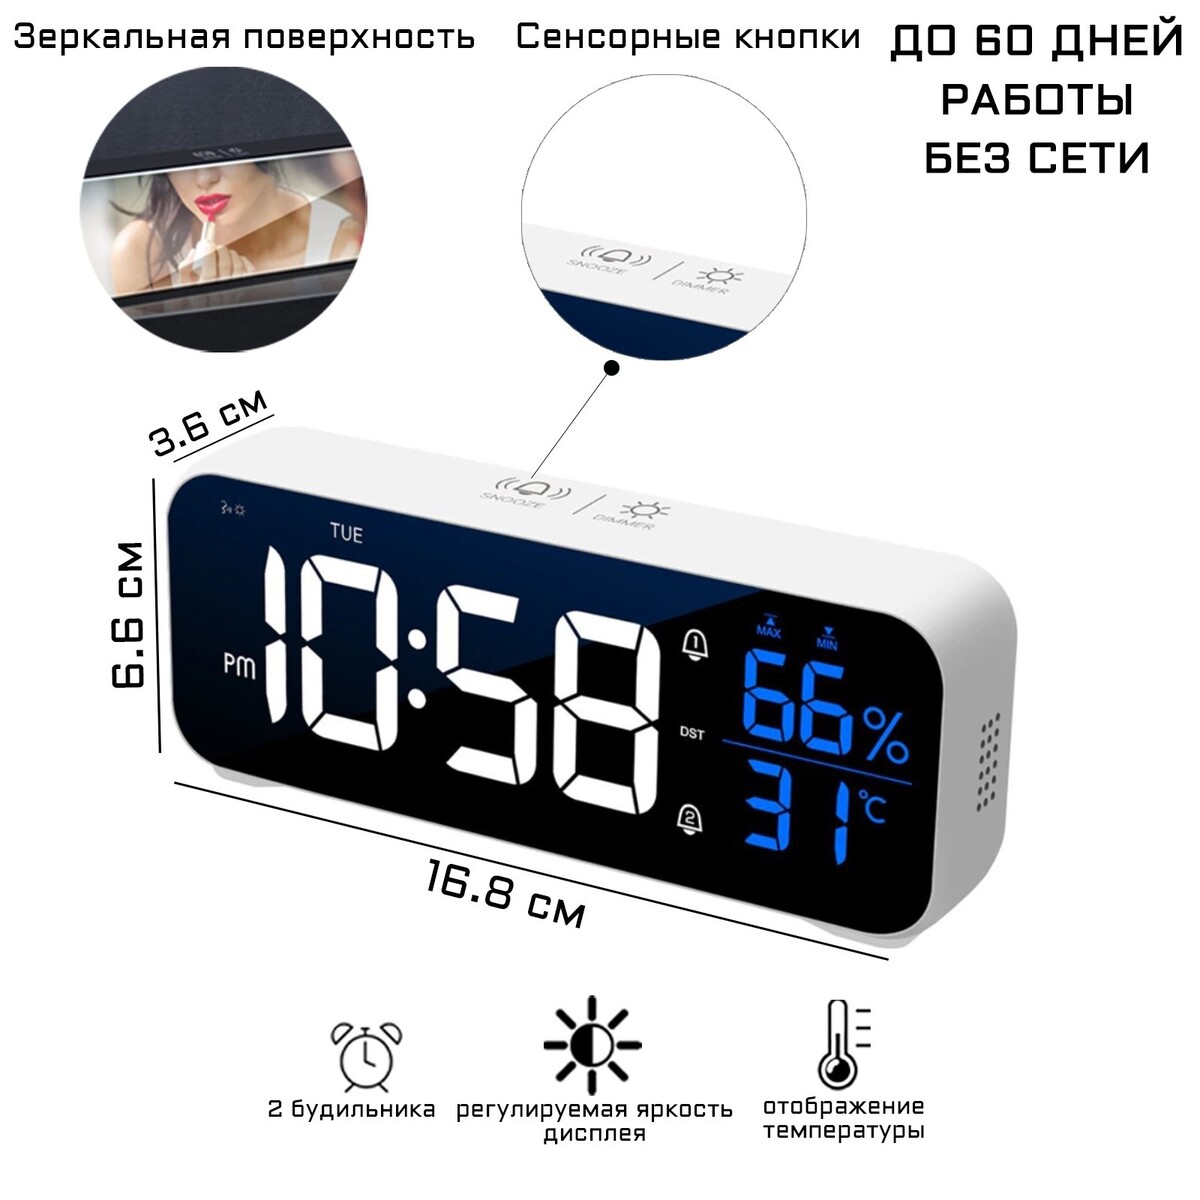 Часы - будильник электронные настольные: календарь, термометр, гигрометр, 16.8 х 6.6 см часы настольные электронные будильник термометр календарь гигрометр 7 8х8 3 см черные